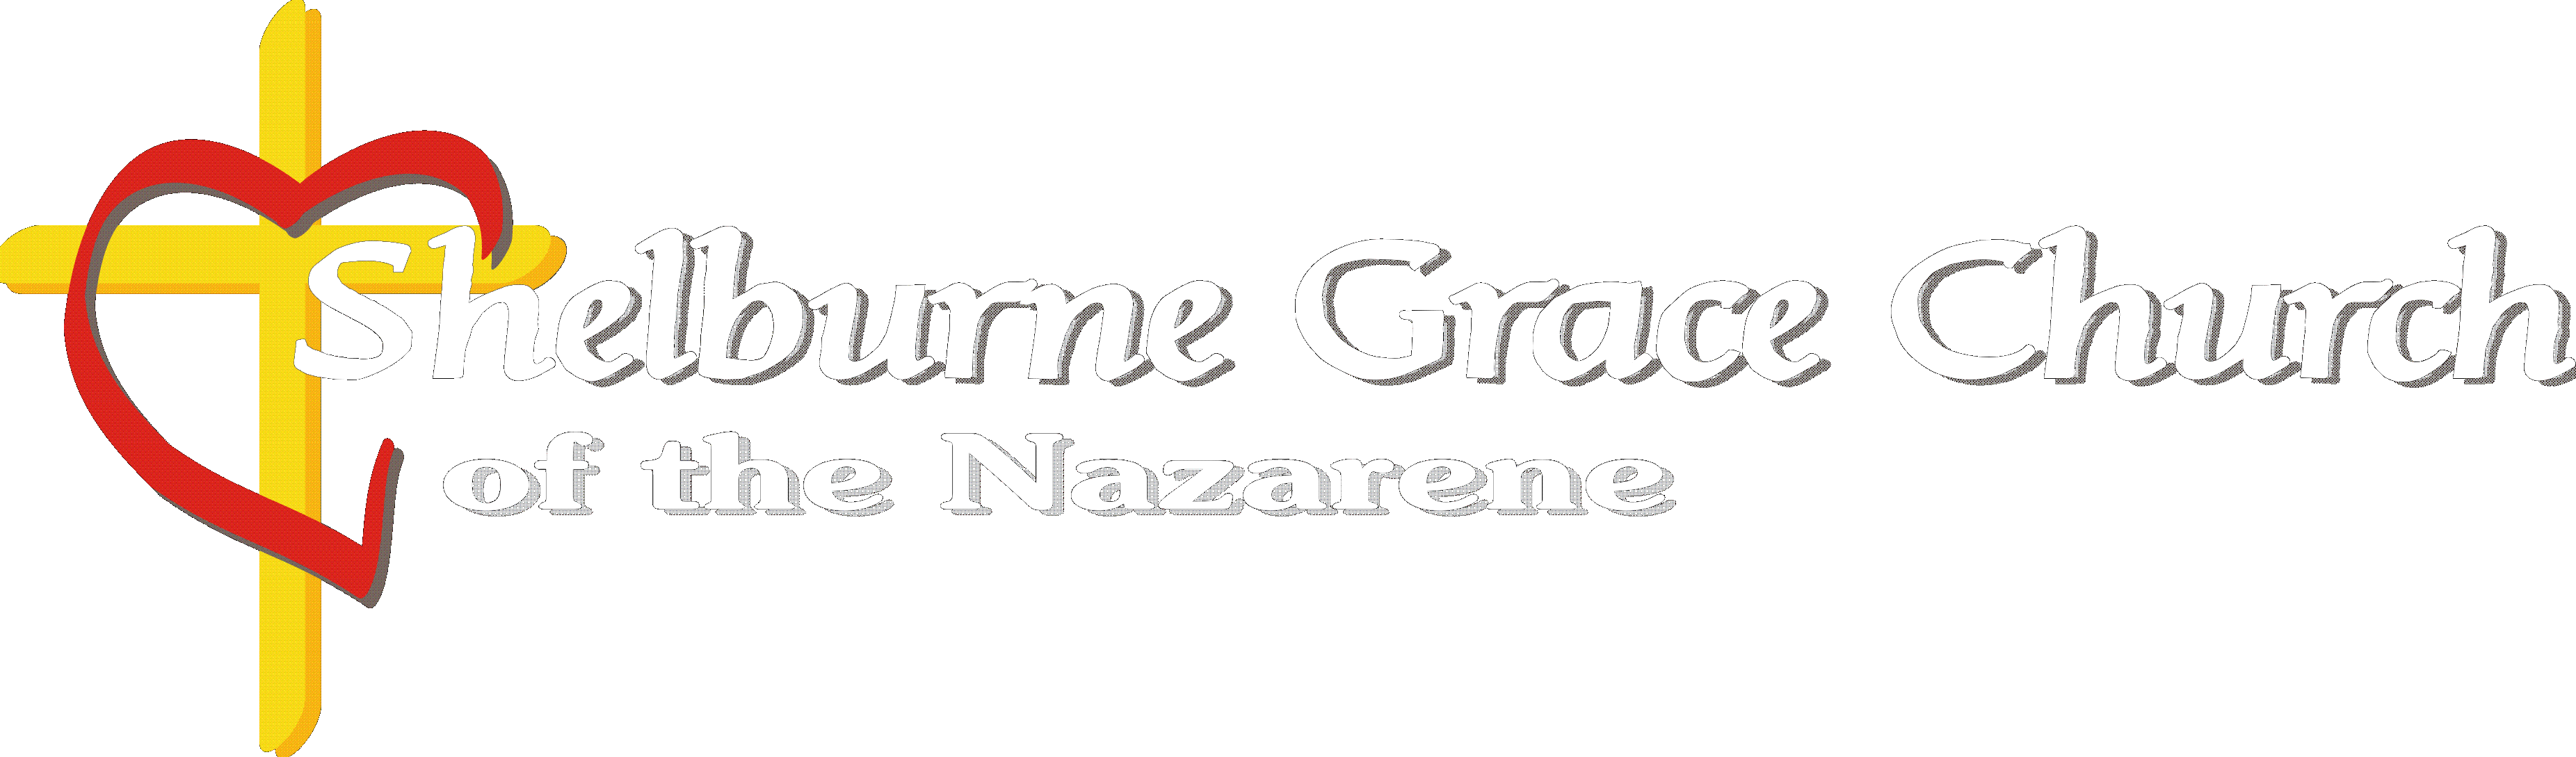 Shelburne Grace Church of the Nazarene